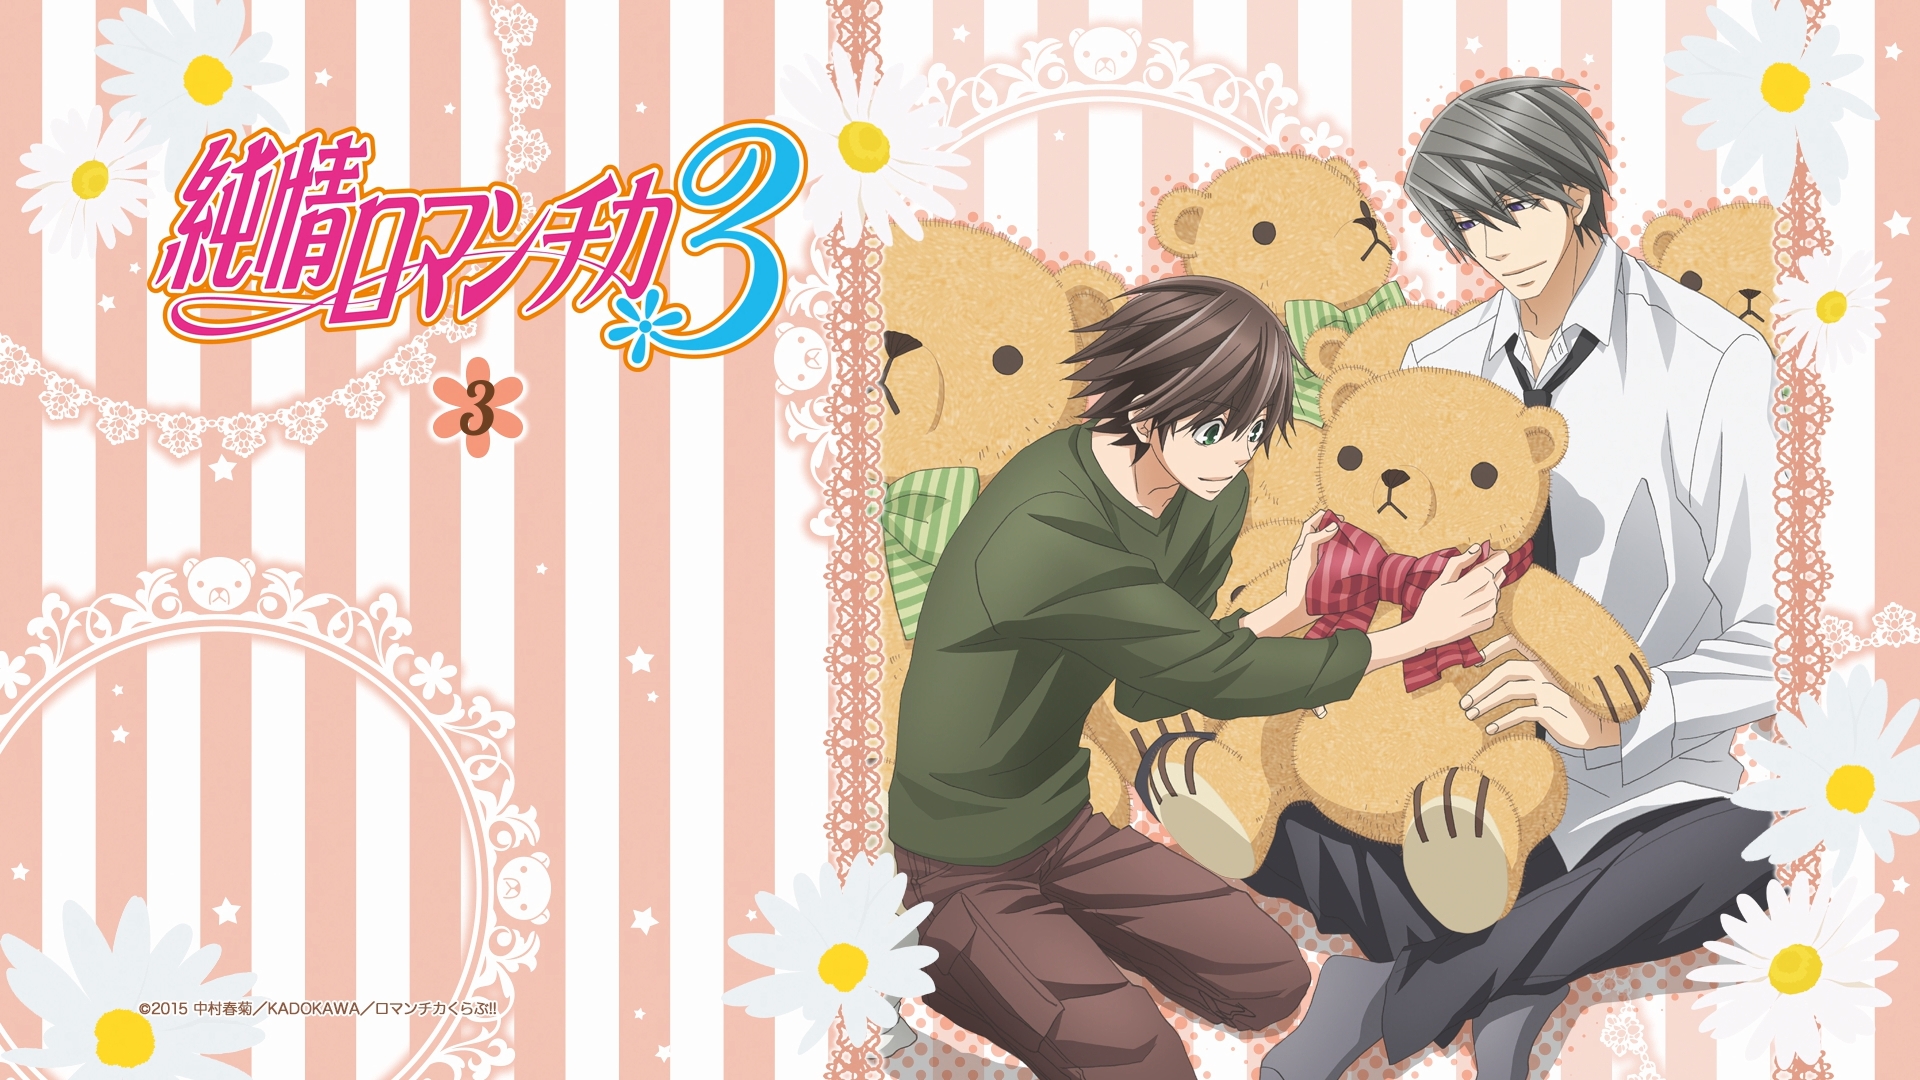 Find more Raw Anime Junjou Romantica 3 BD Vol3 Garuda Raws. 